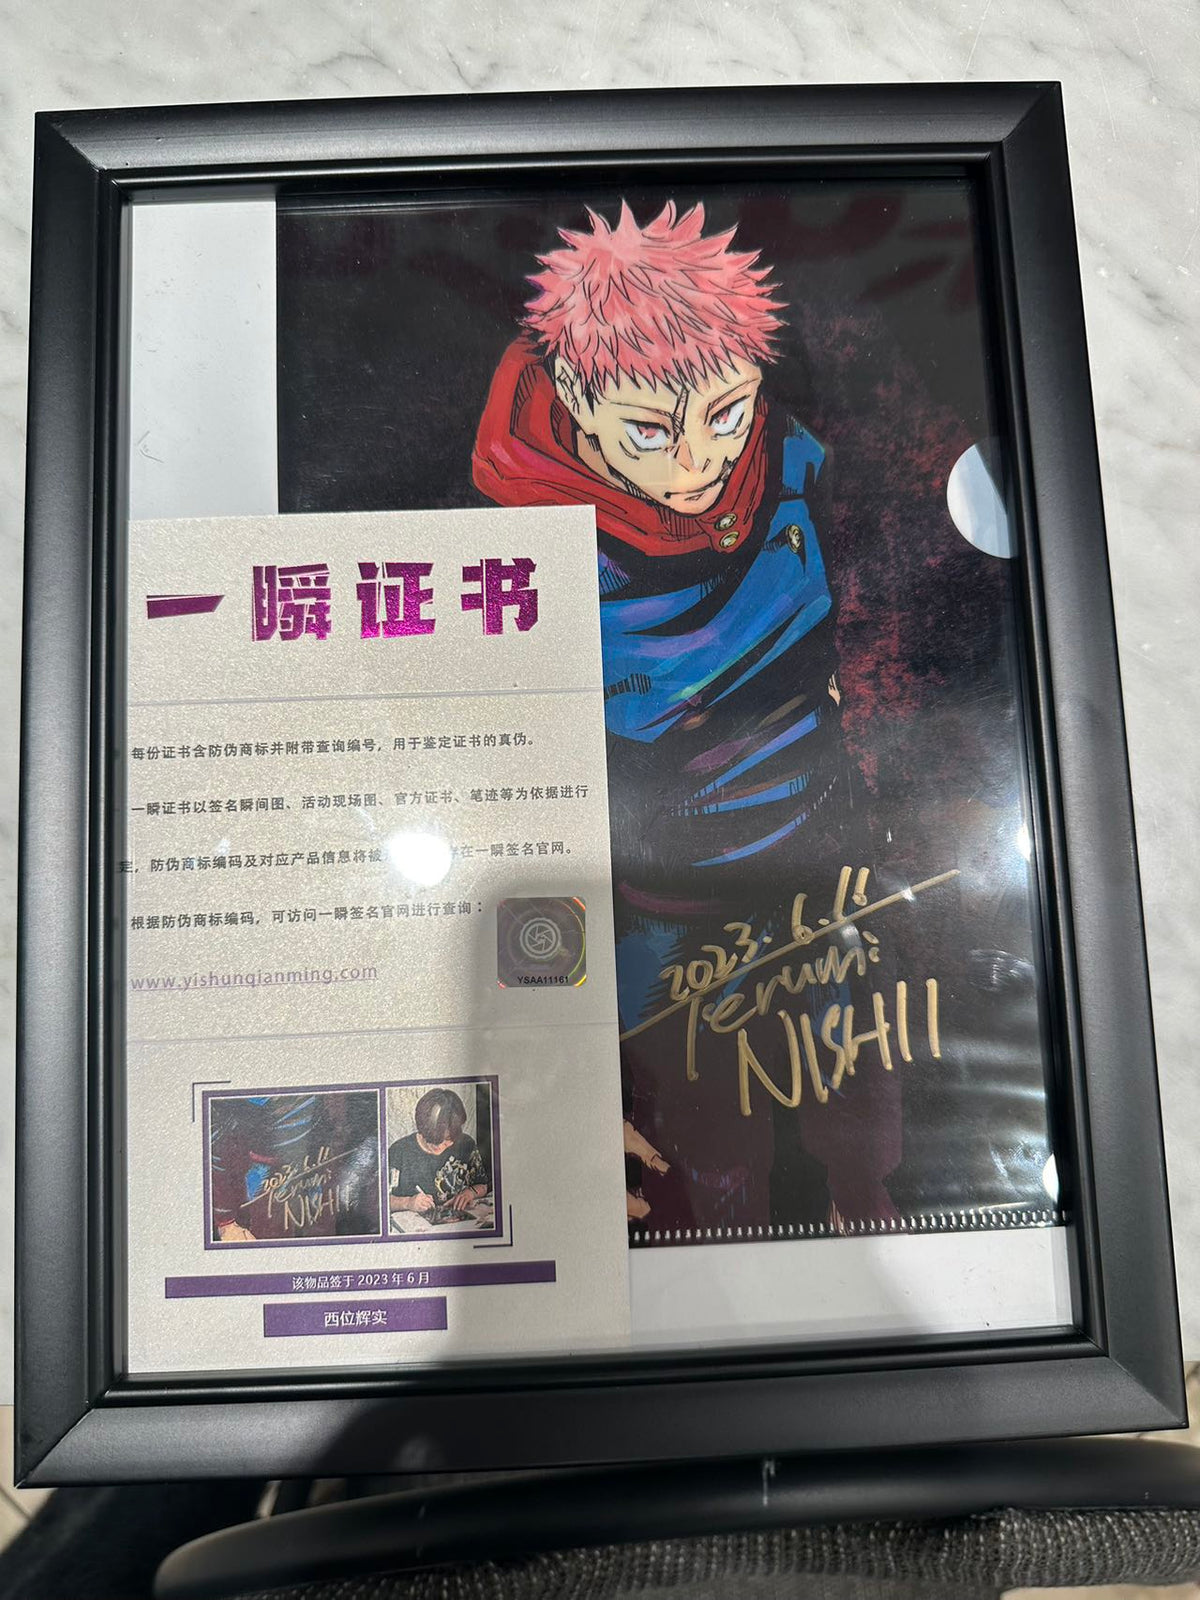 Terumi Nishii (Animator of Jujutsu Kaisen) Autograph on Yuji Itadori folder